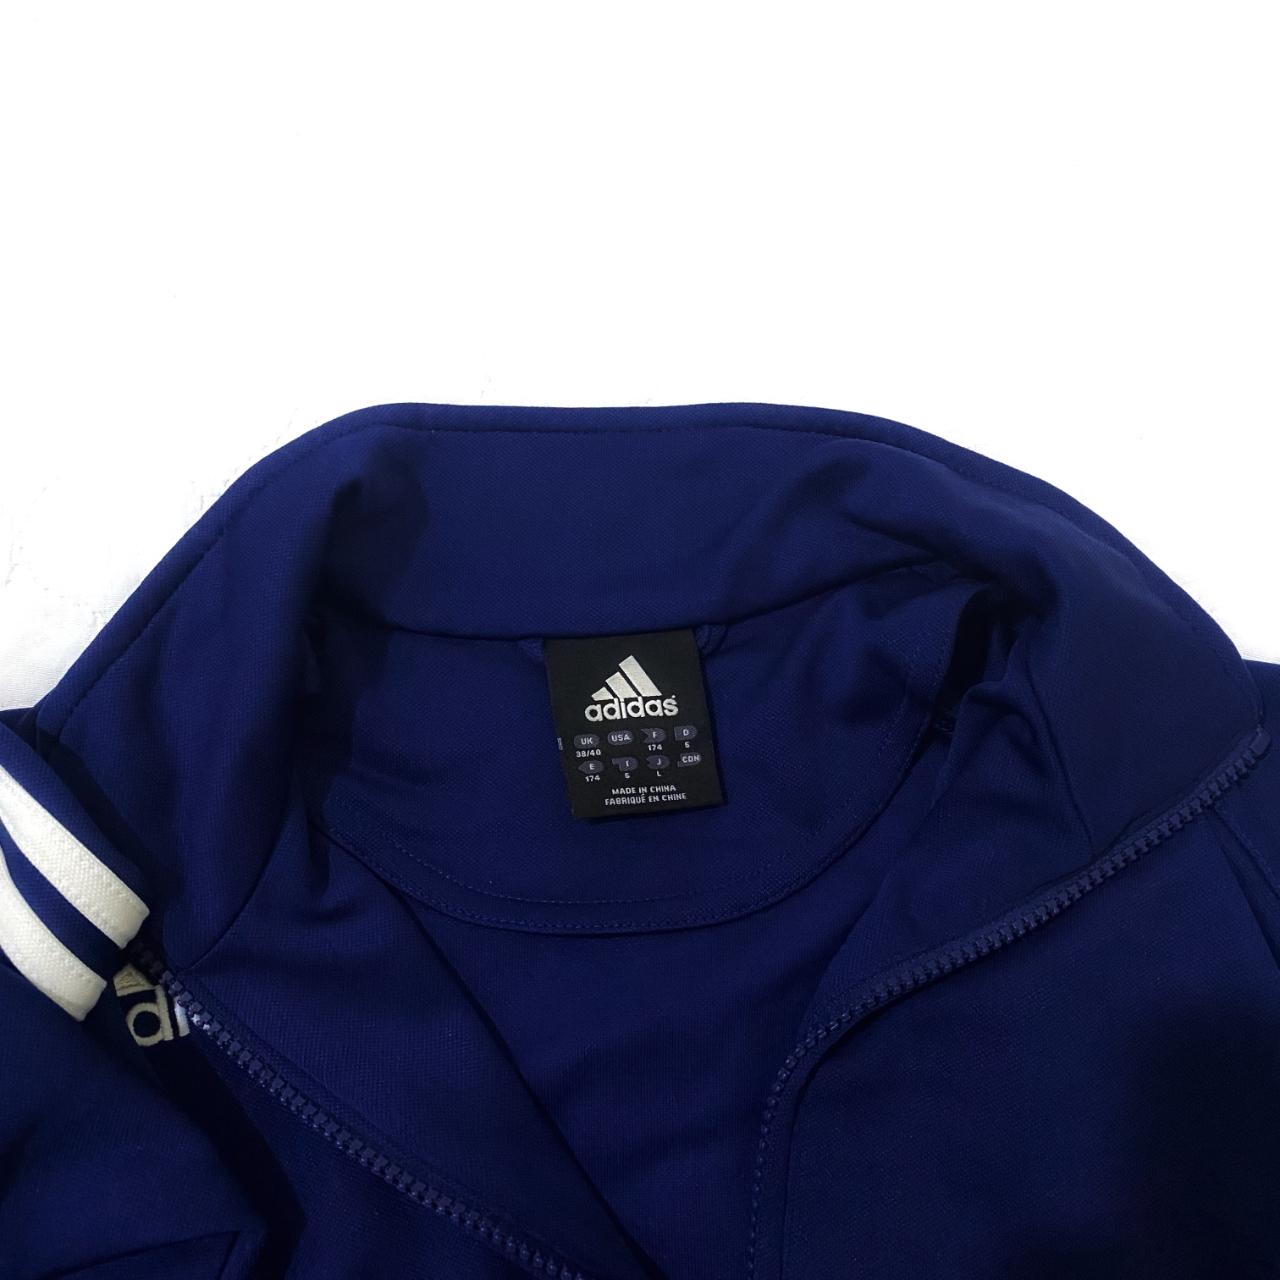 Adidas Men's Blue and Grey Jacket | Depop